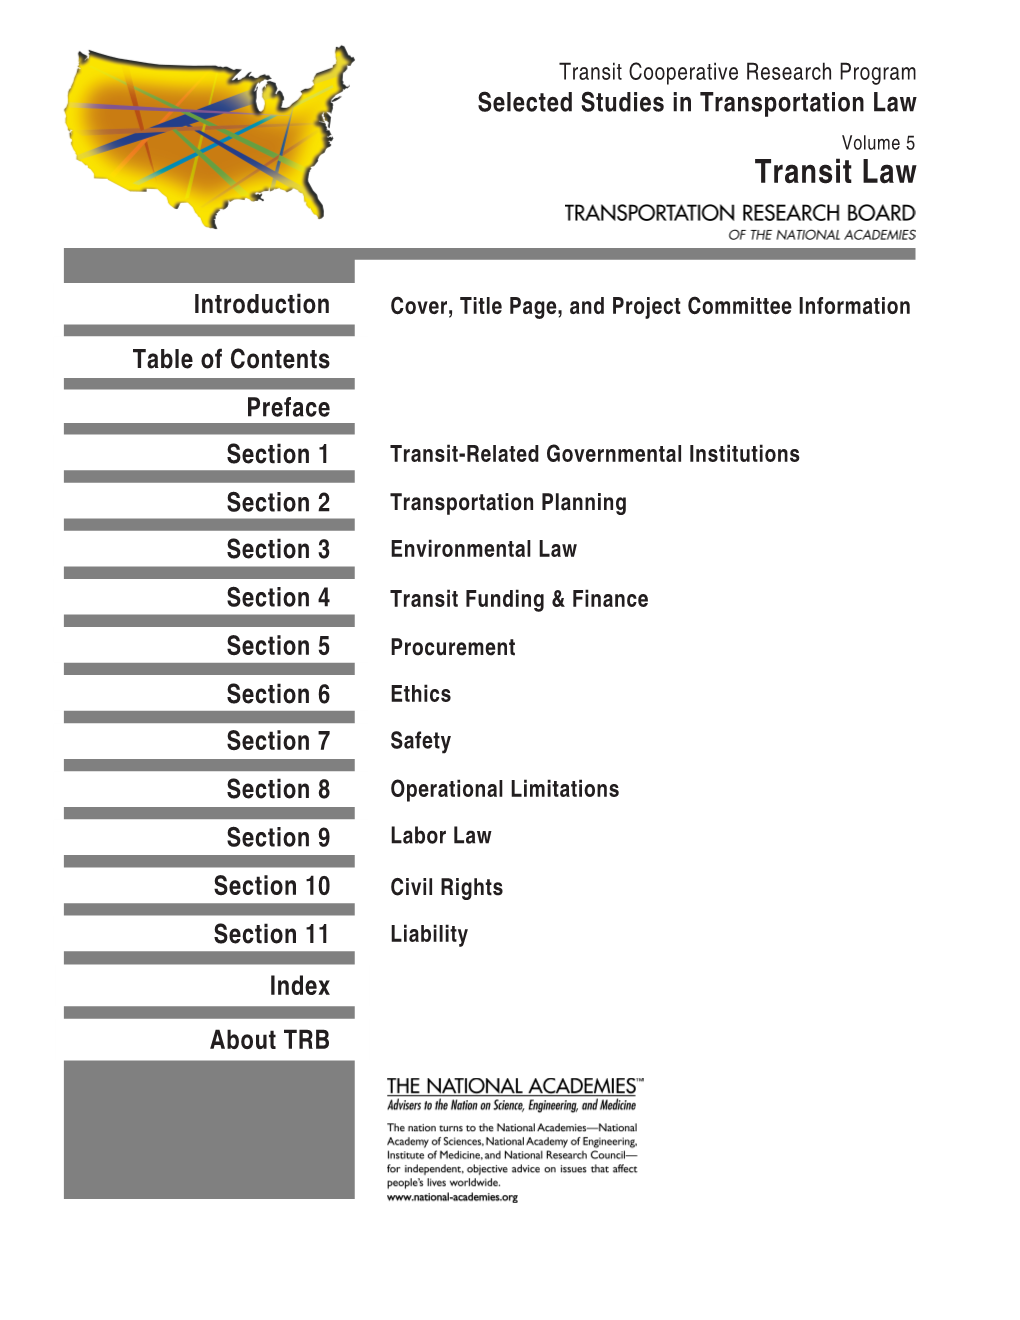 Transit Cooperative Research Program Selected Studies in Transportation Law Volume 5 Transit Law